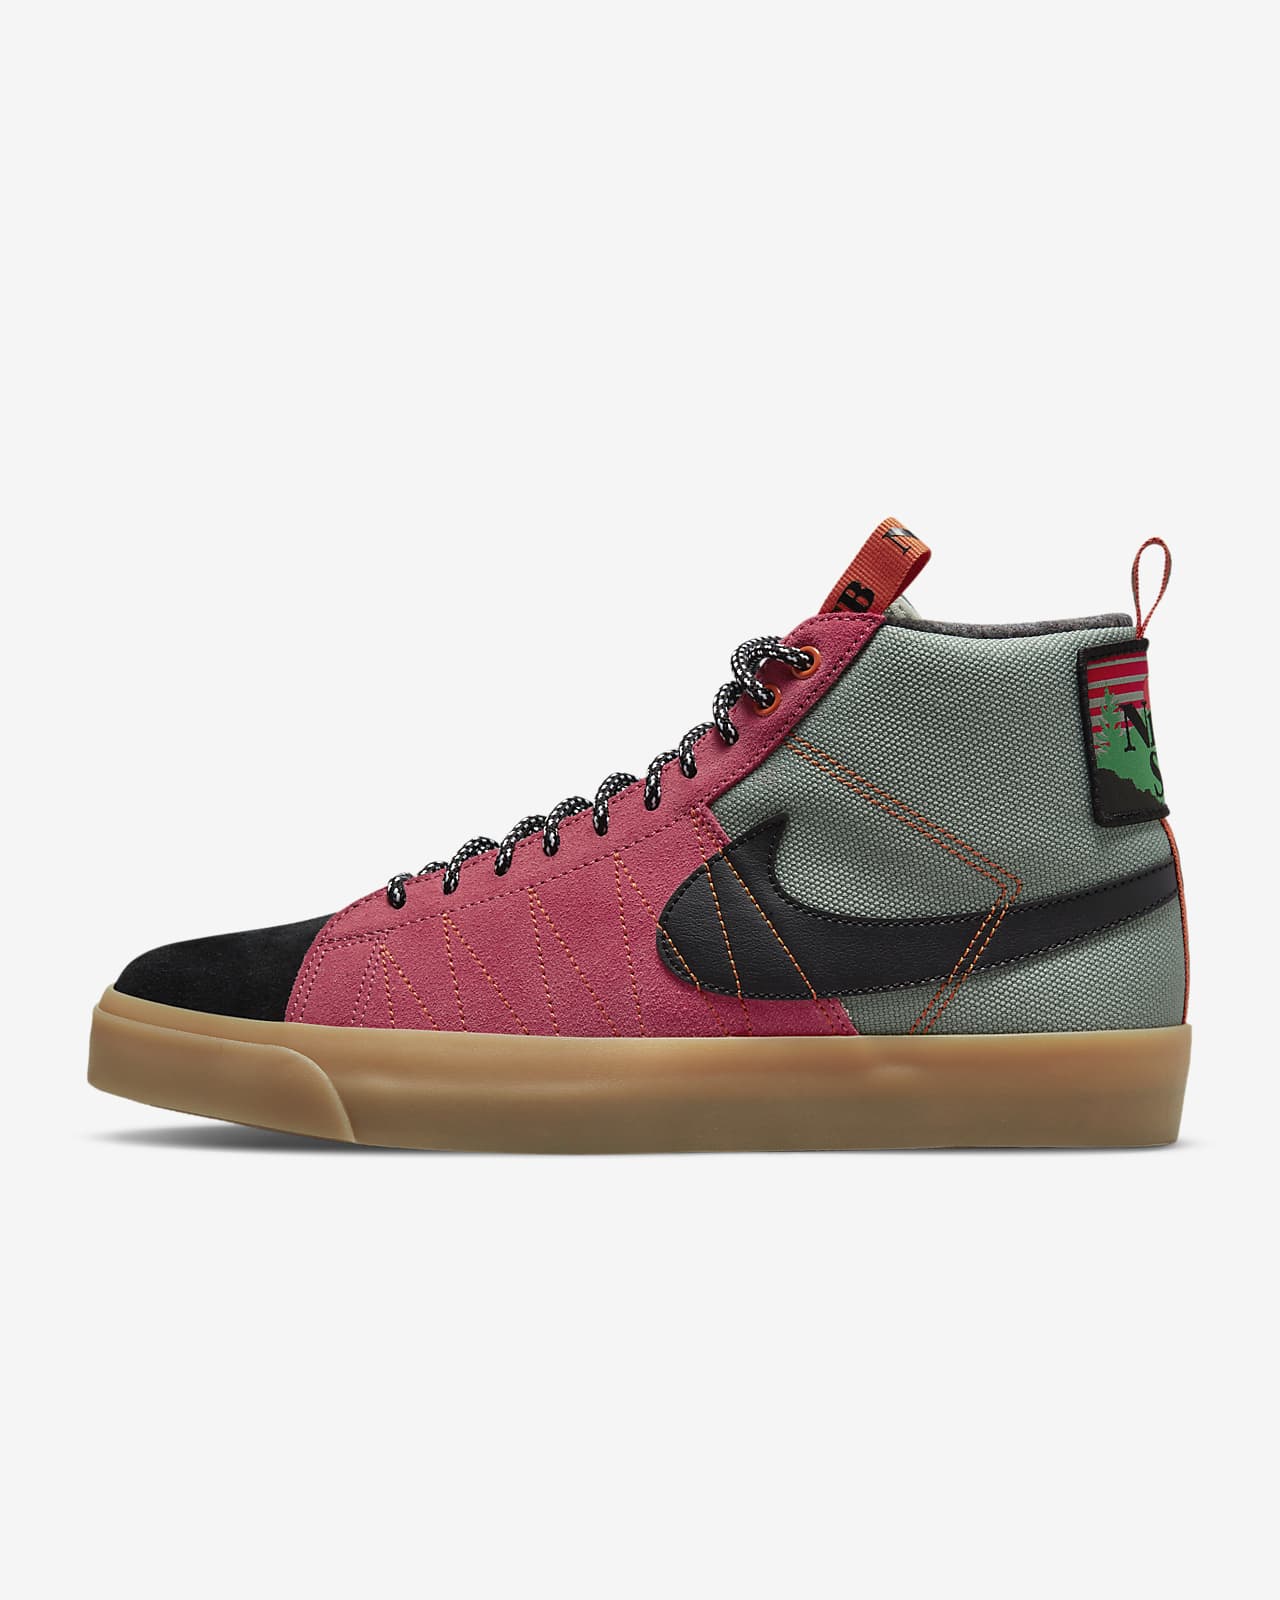 Calzado de skateboarding Nike SB Zoom Blazer Mid Premium